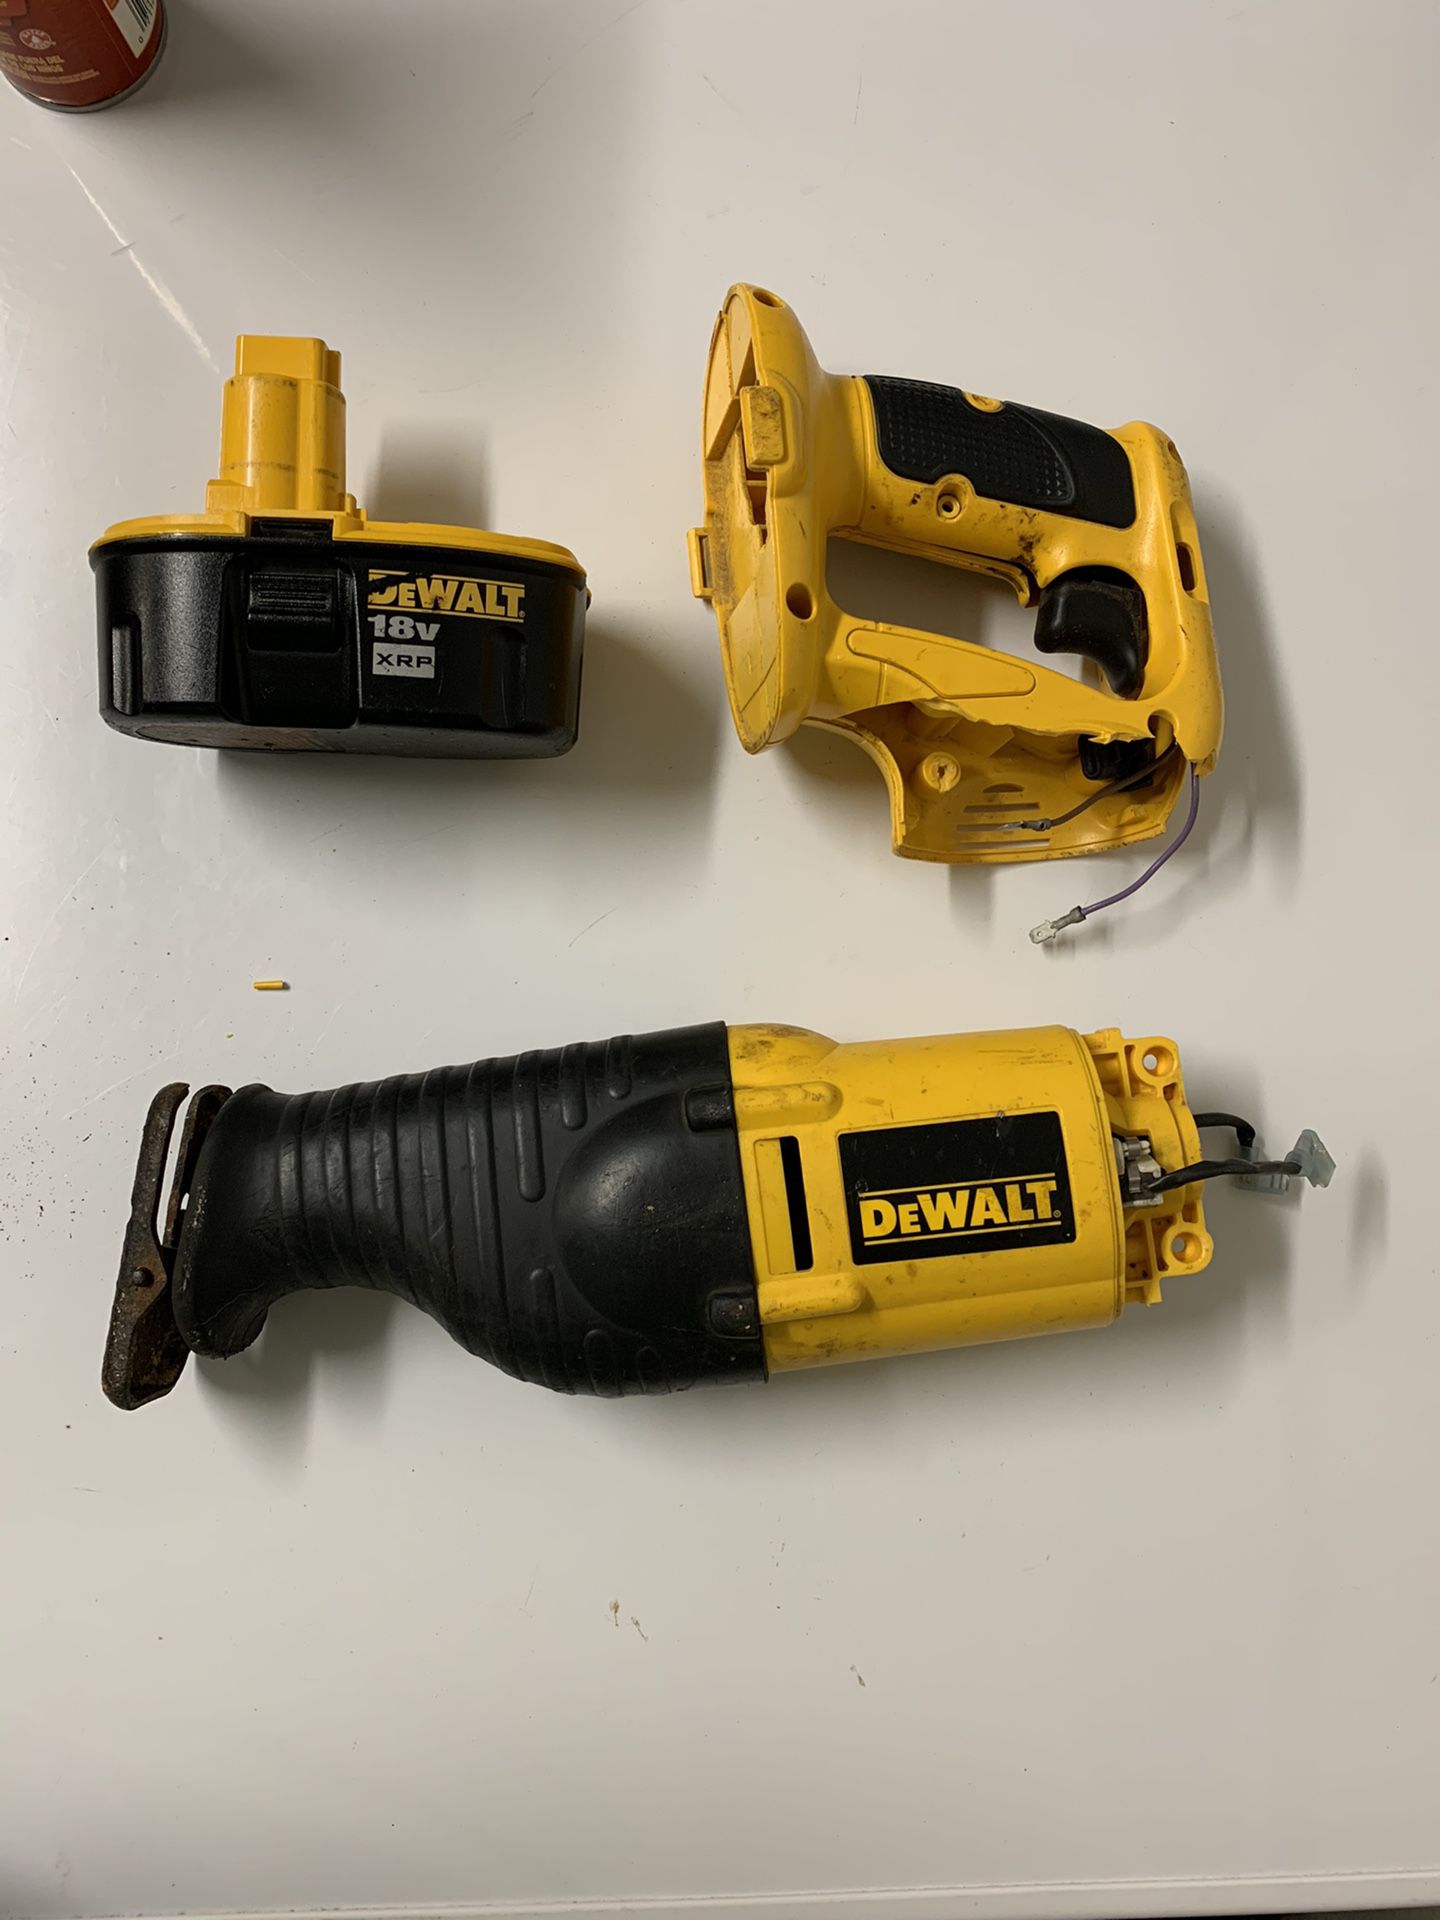 DeWalt Reciprocating saw and dead battery